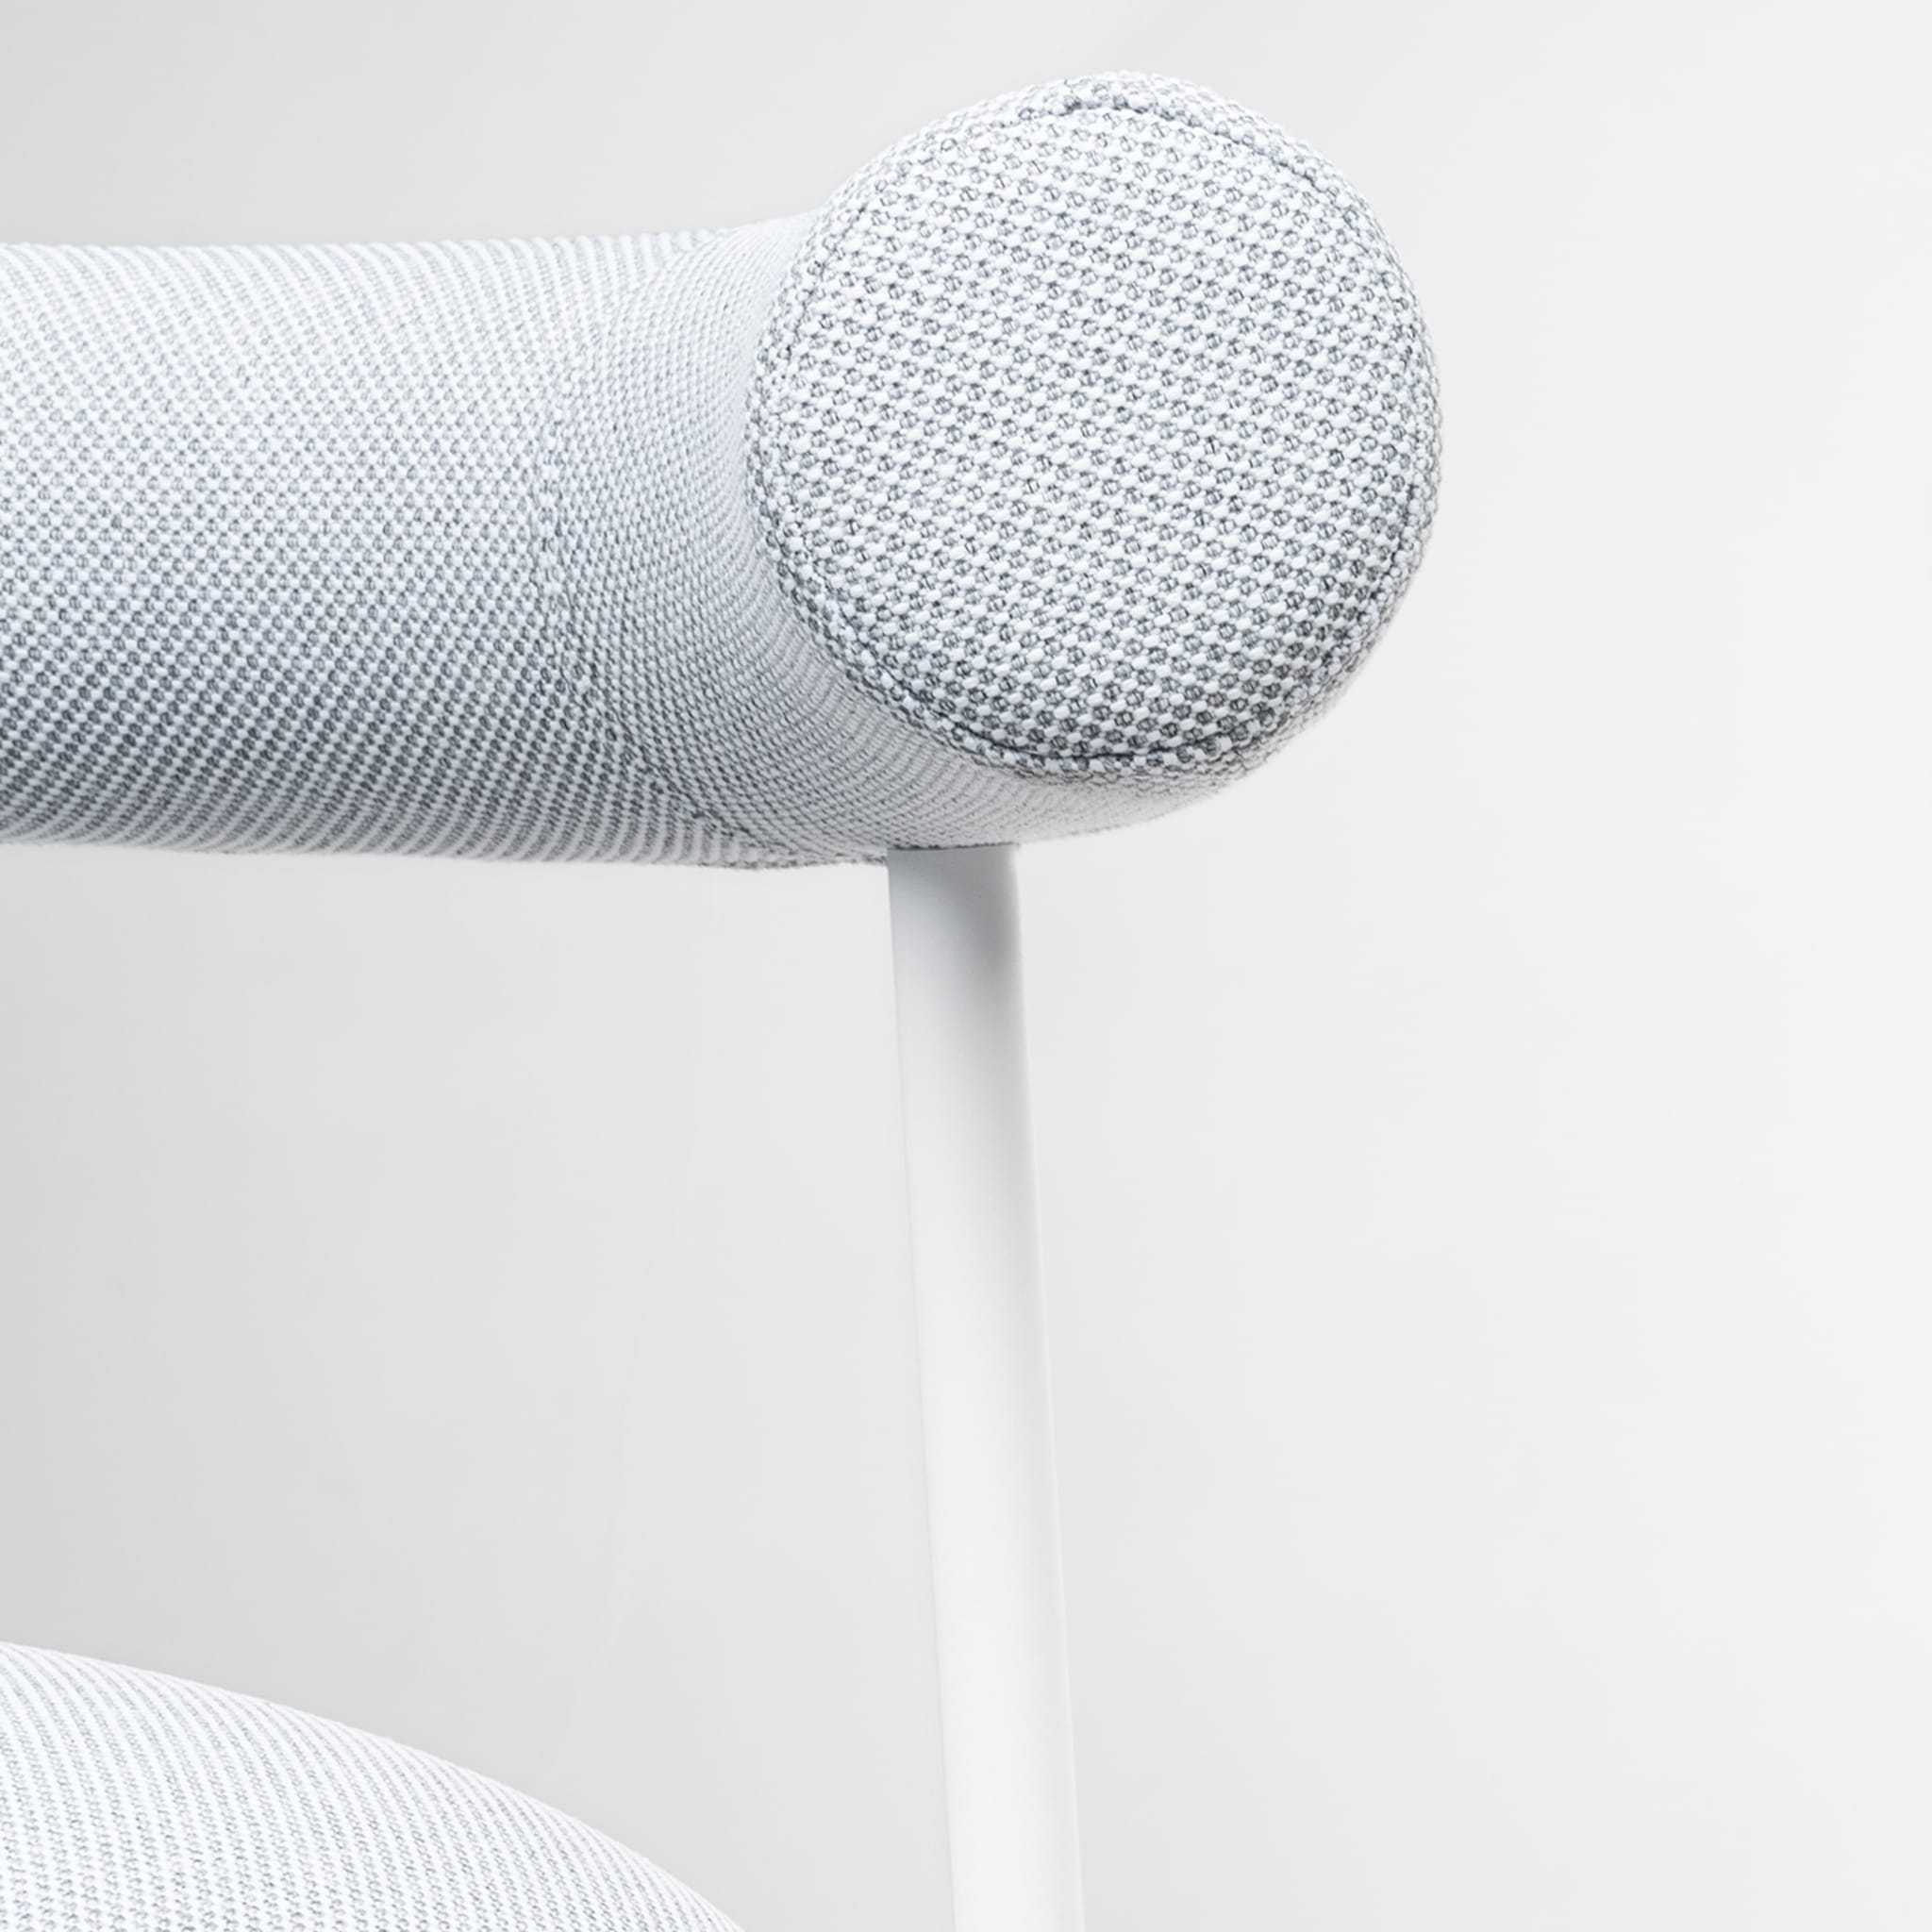 Pampa S White Chair by Studio Pastina - Alternative view 3